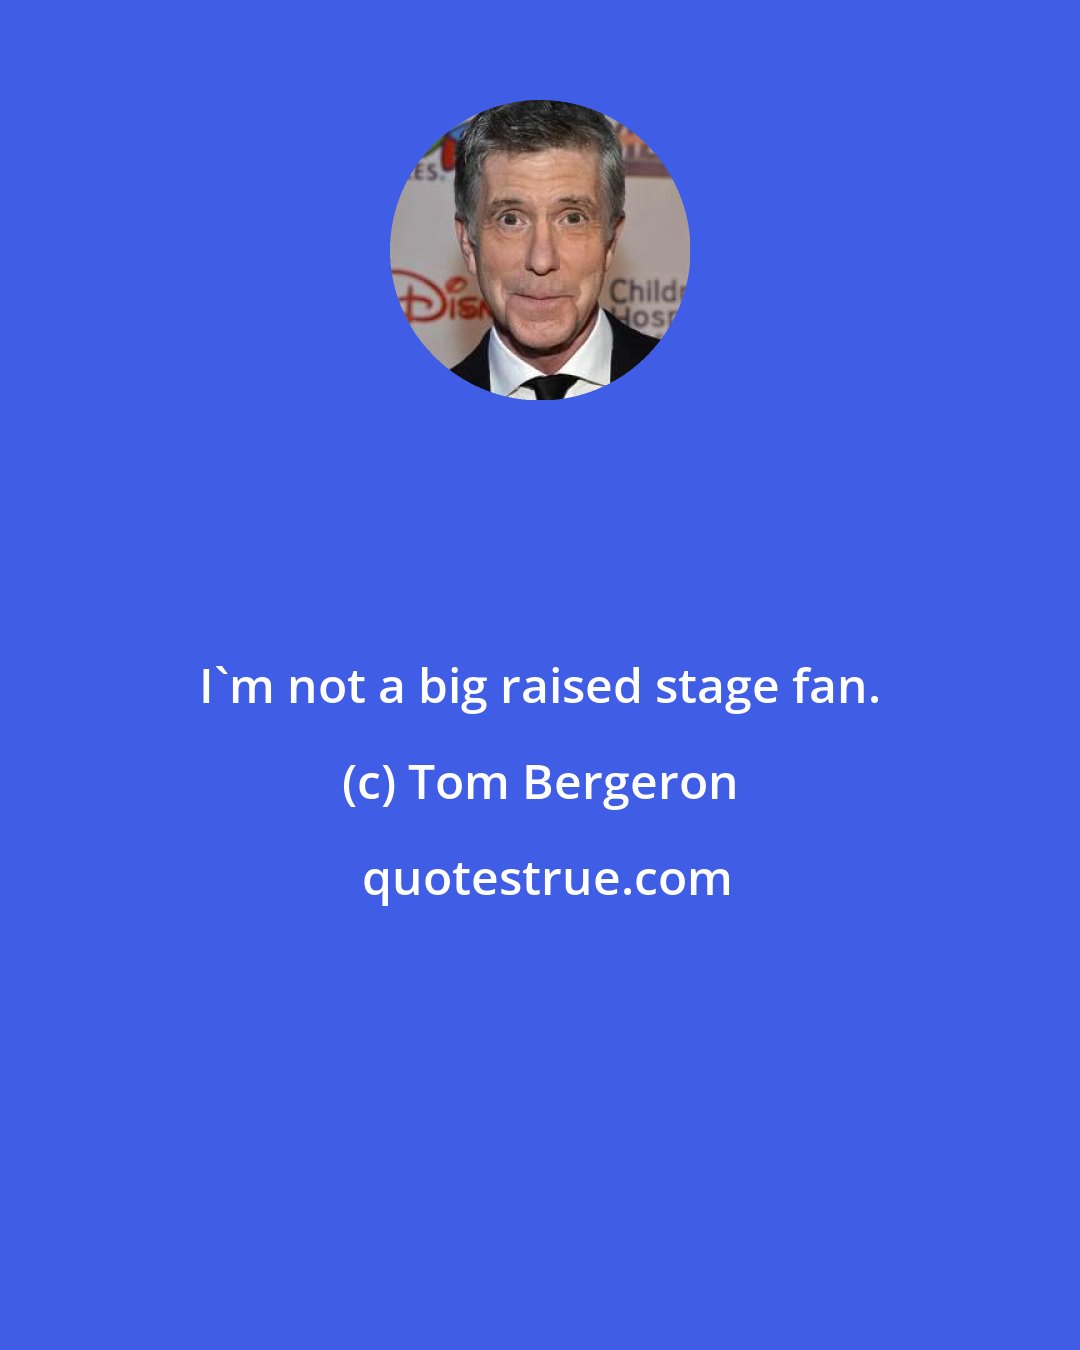 Tom Bergeron: I'm not a big raised stage fan.